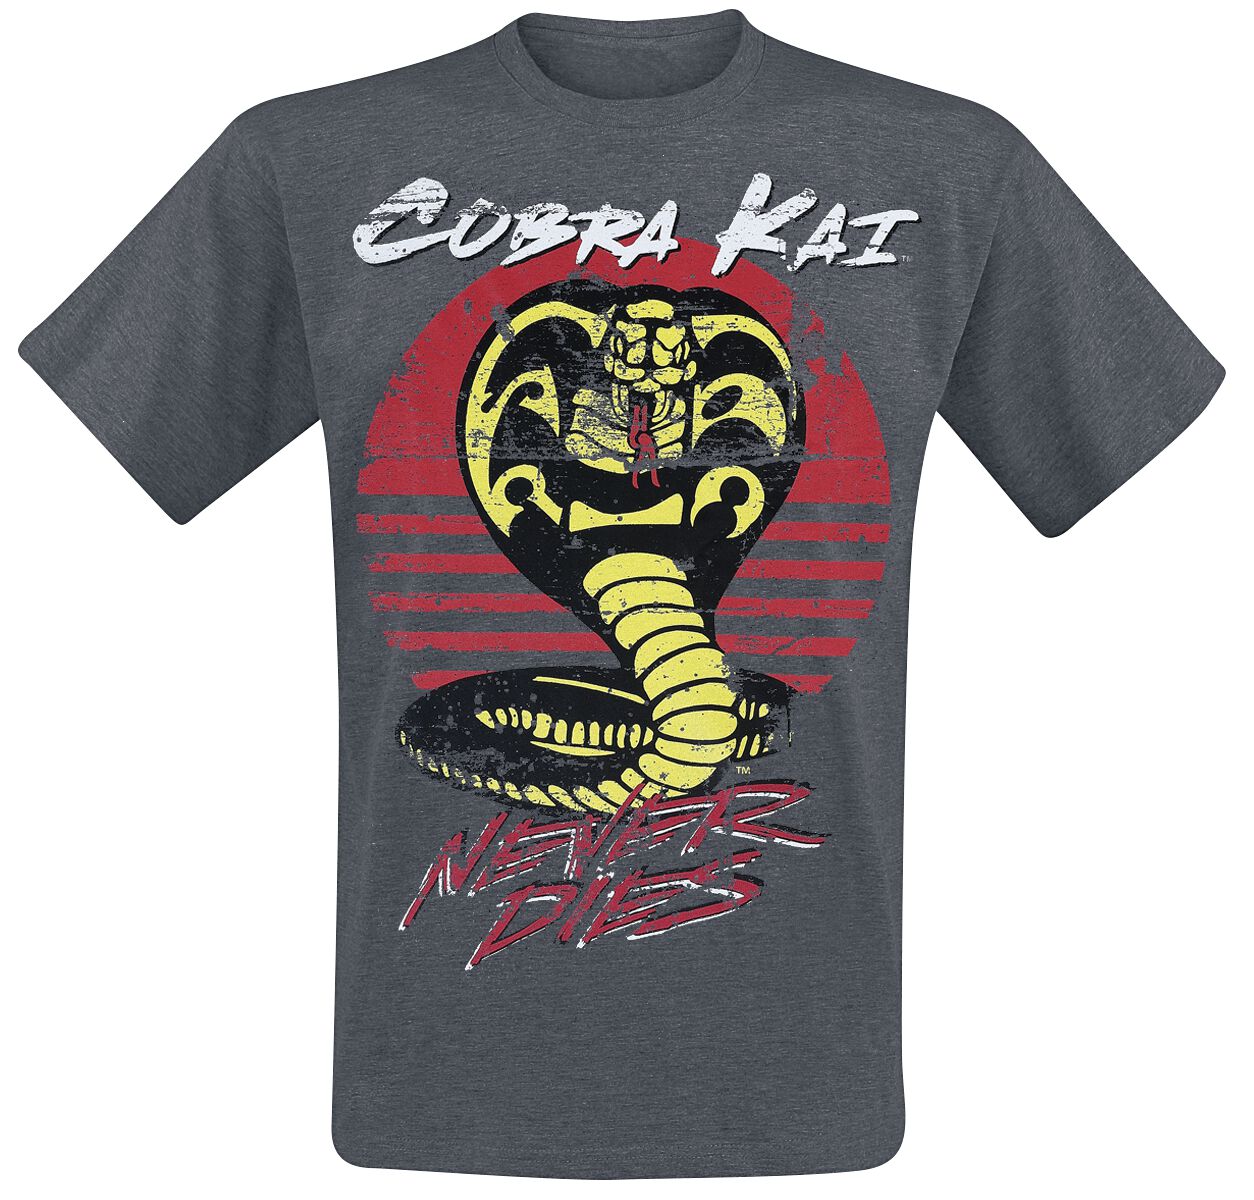 Cobra Kai Never Dies! T-Shirt grey